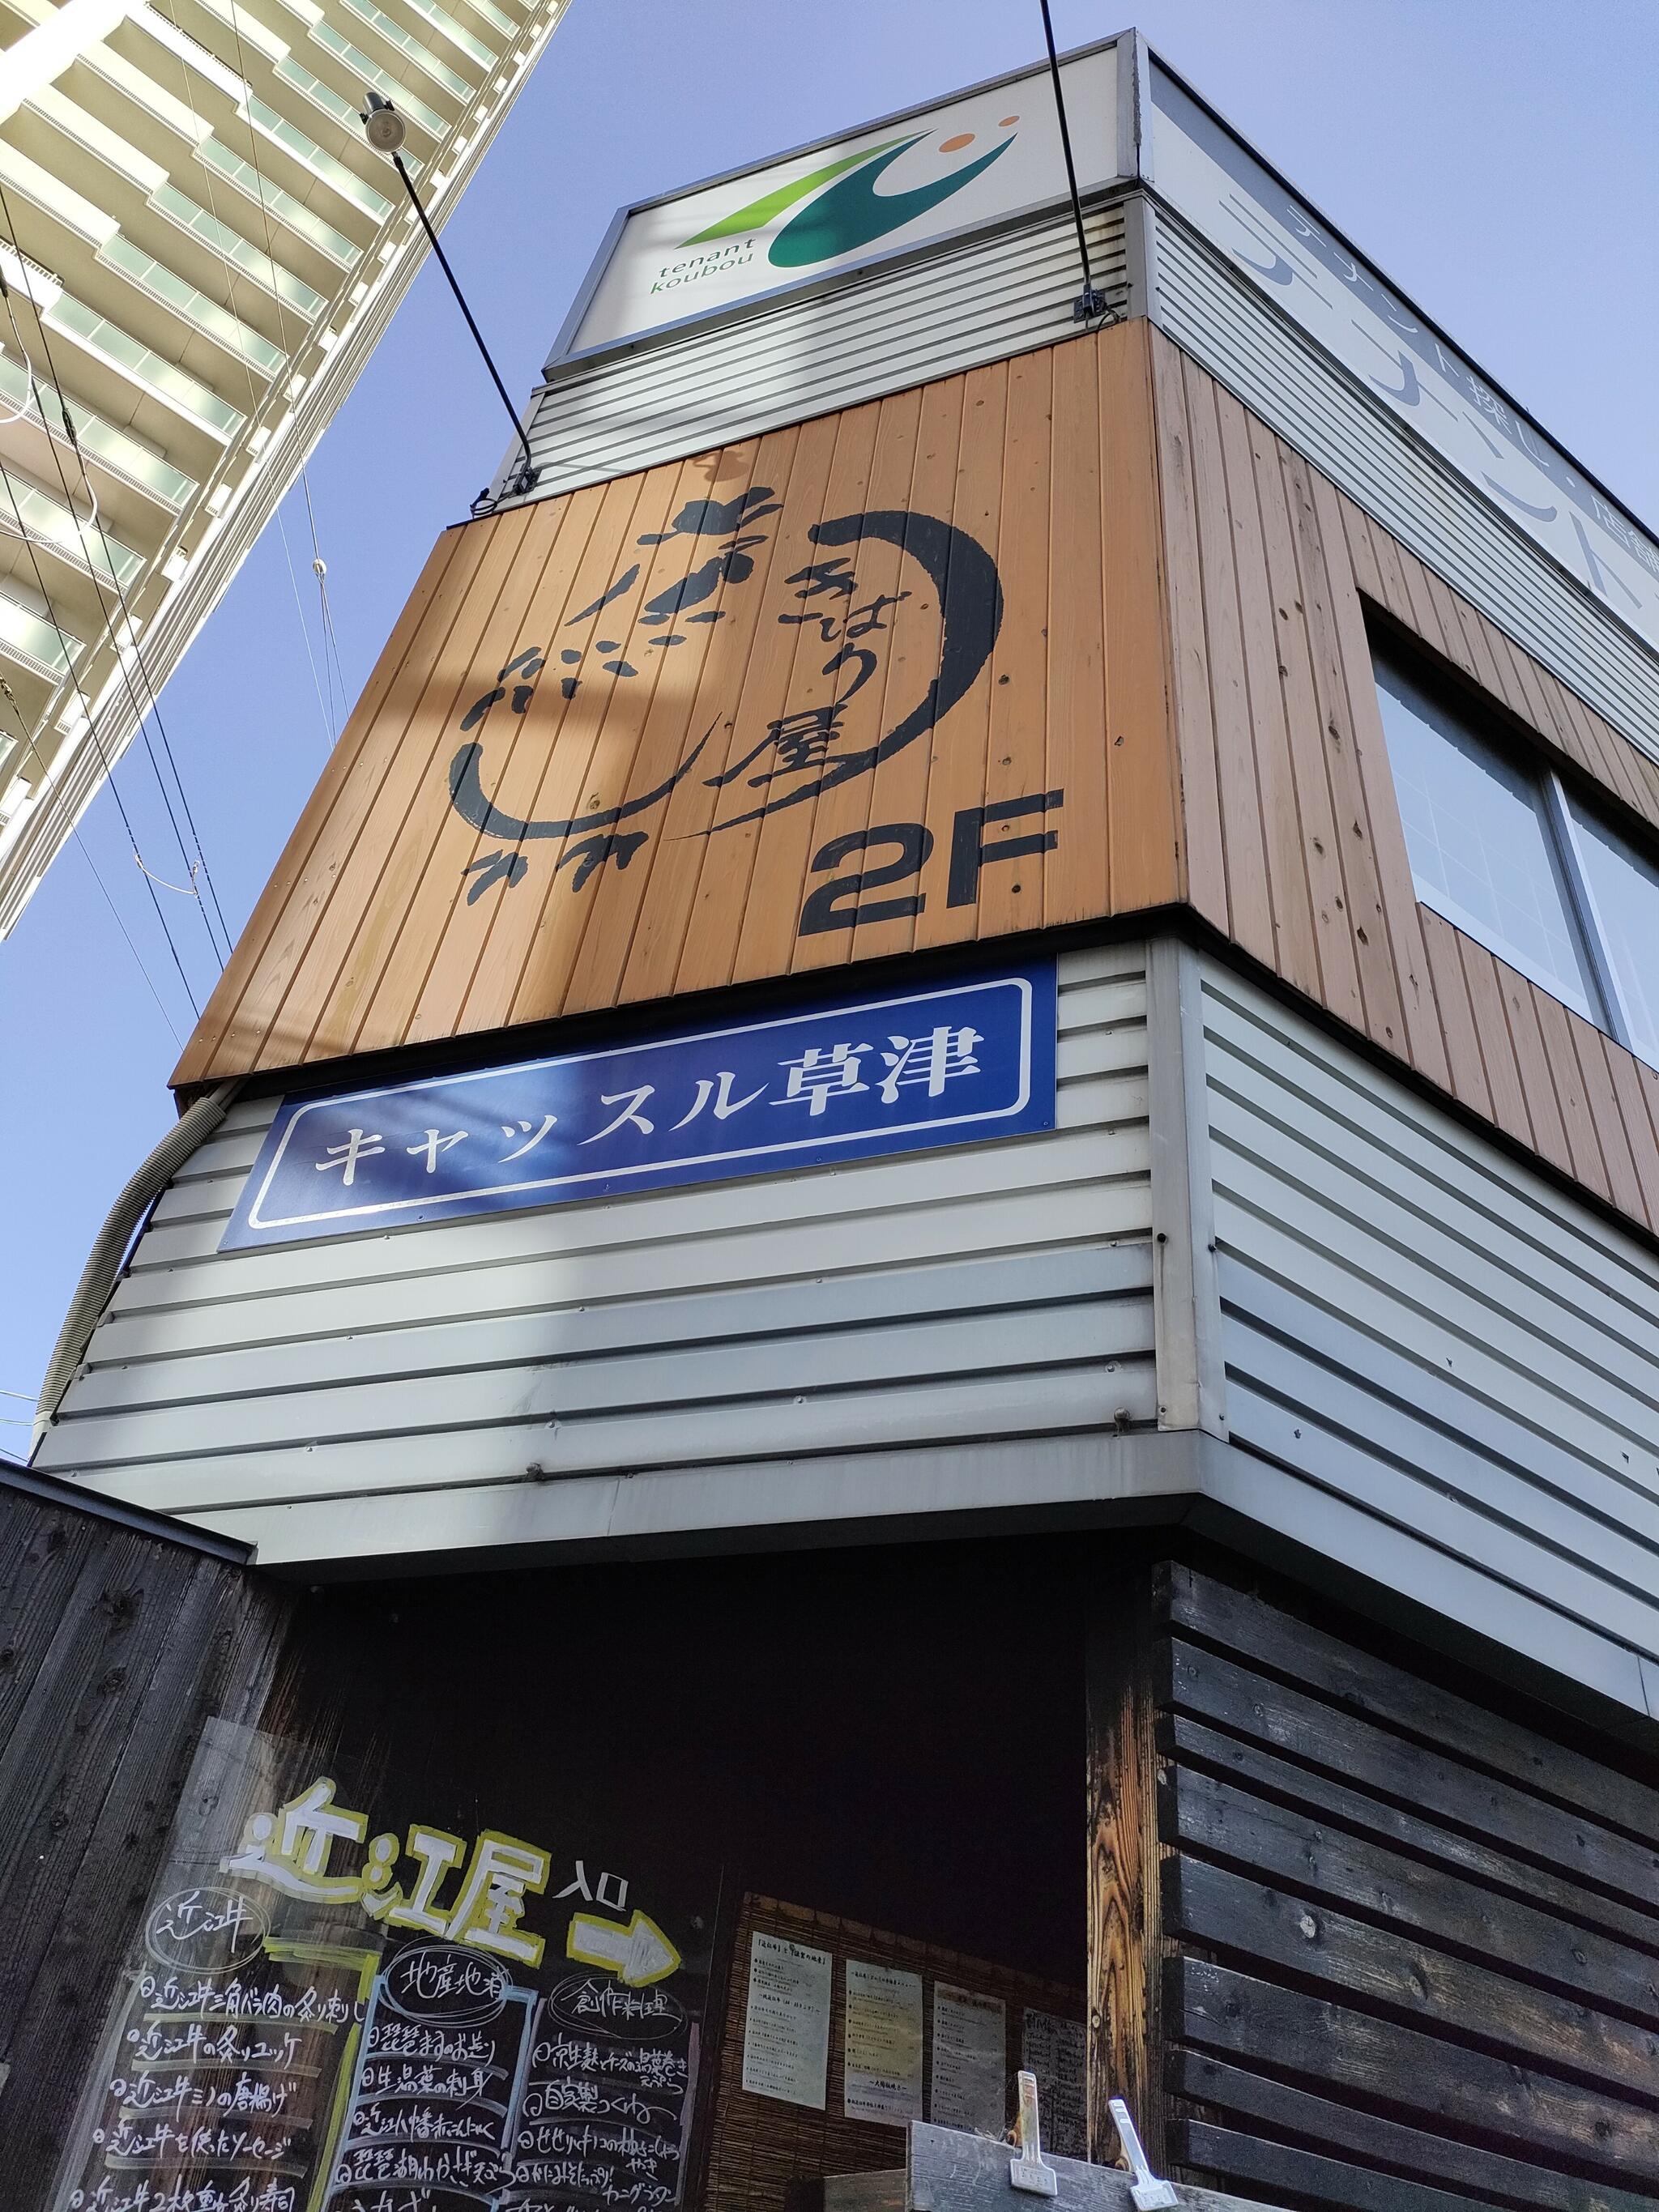 近江鶏料理 きばり屋の代表写真3